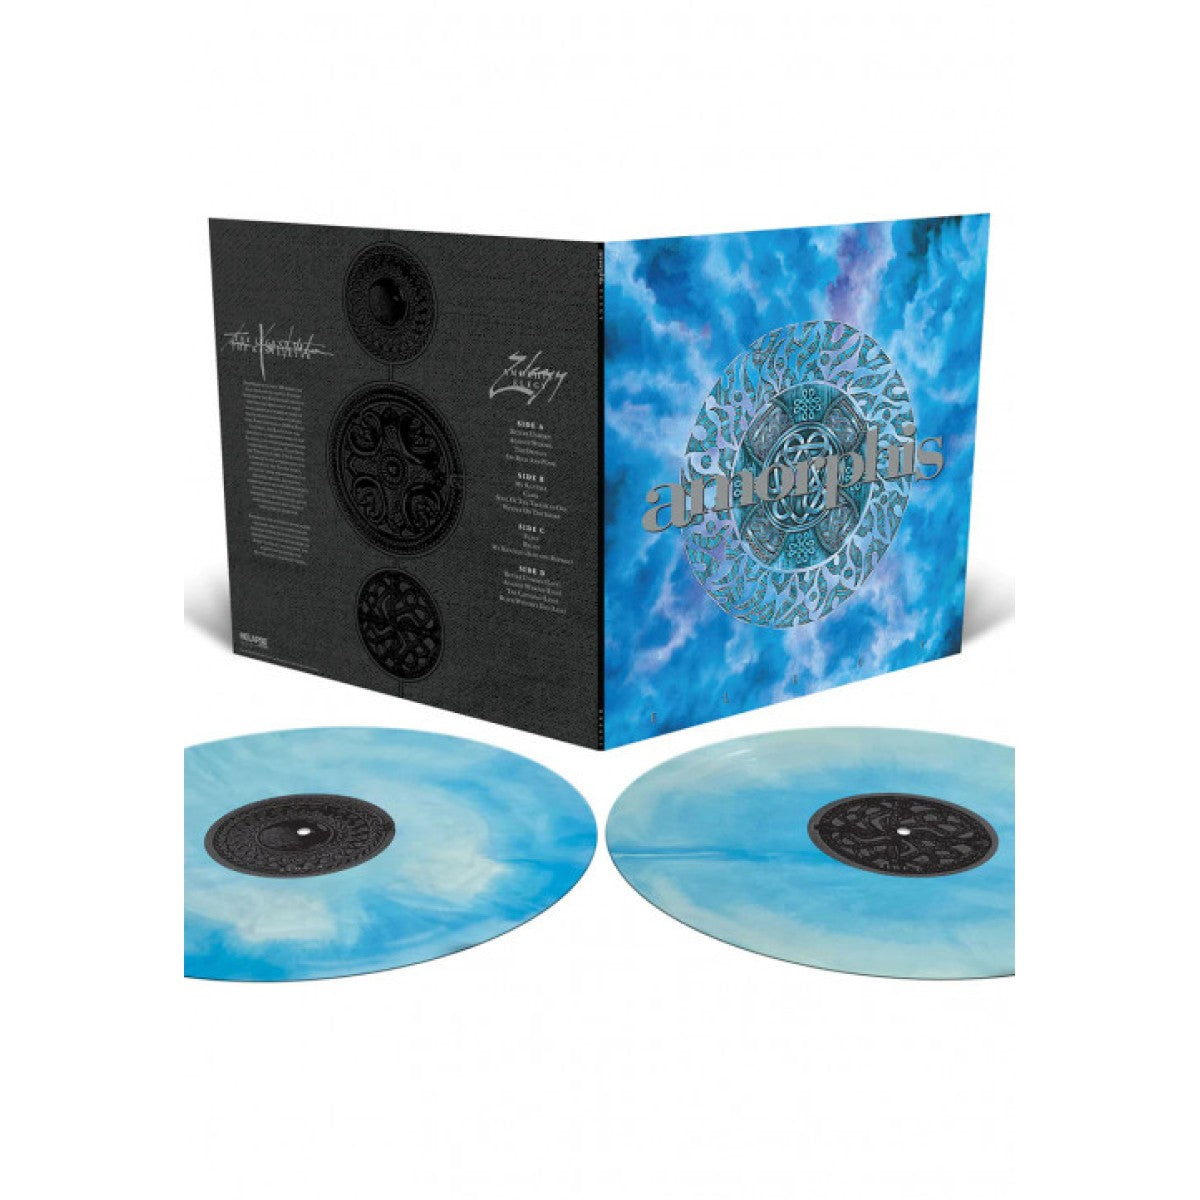 Amorphis "Elegy" Cyan Blue / White Galaxy Merge Vinyl